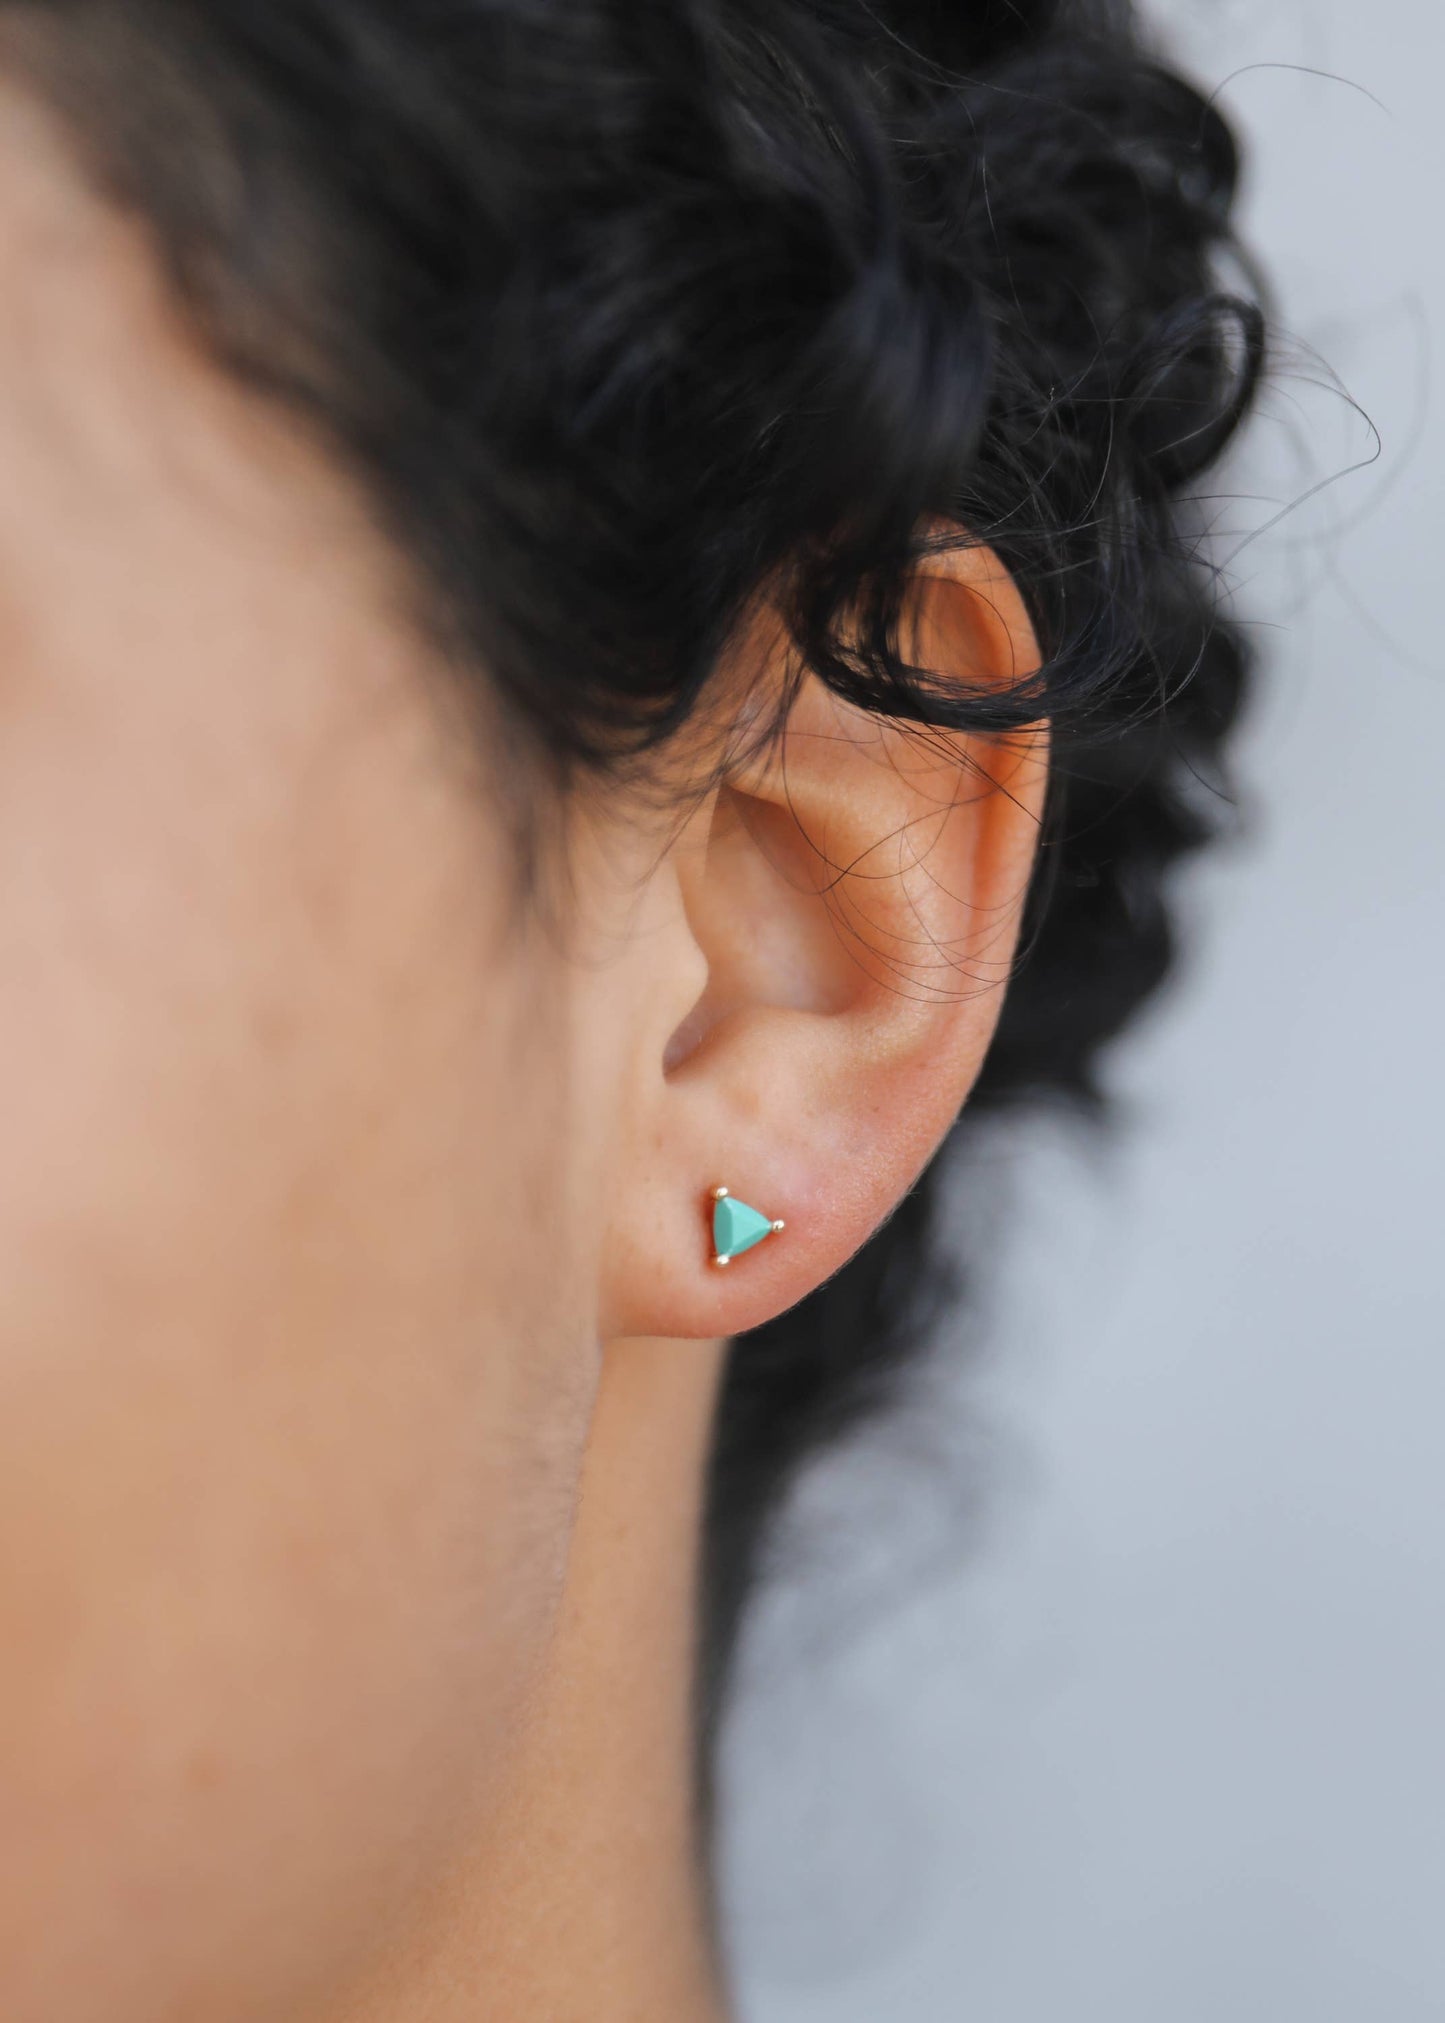 Mini Energy Gem Stud Earrings